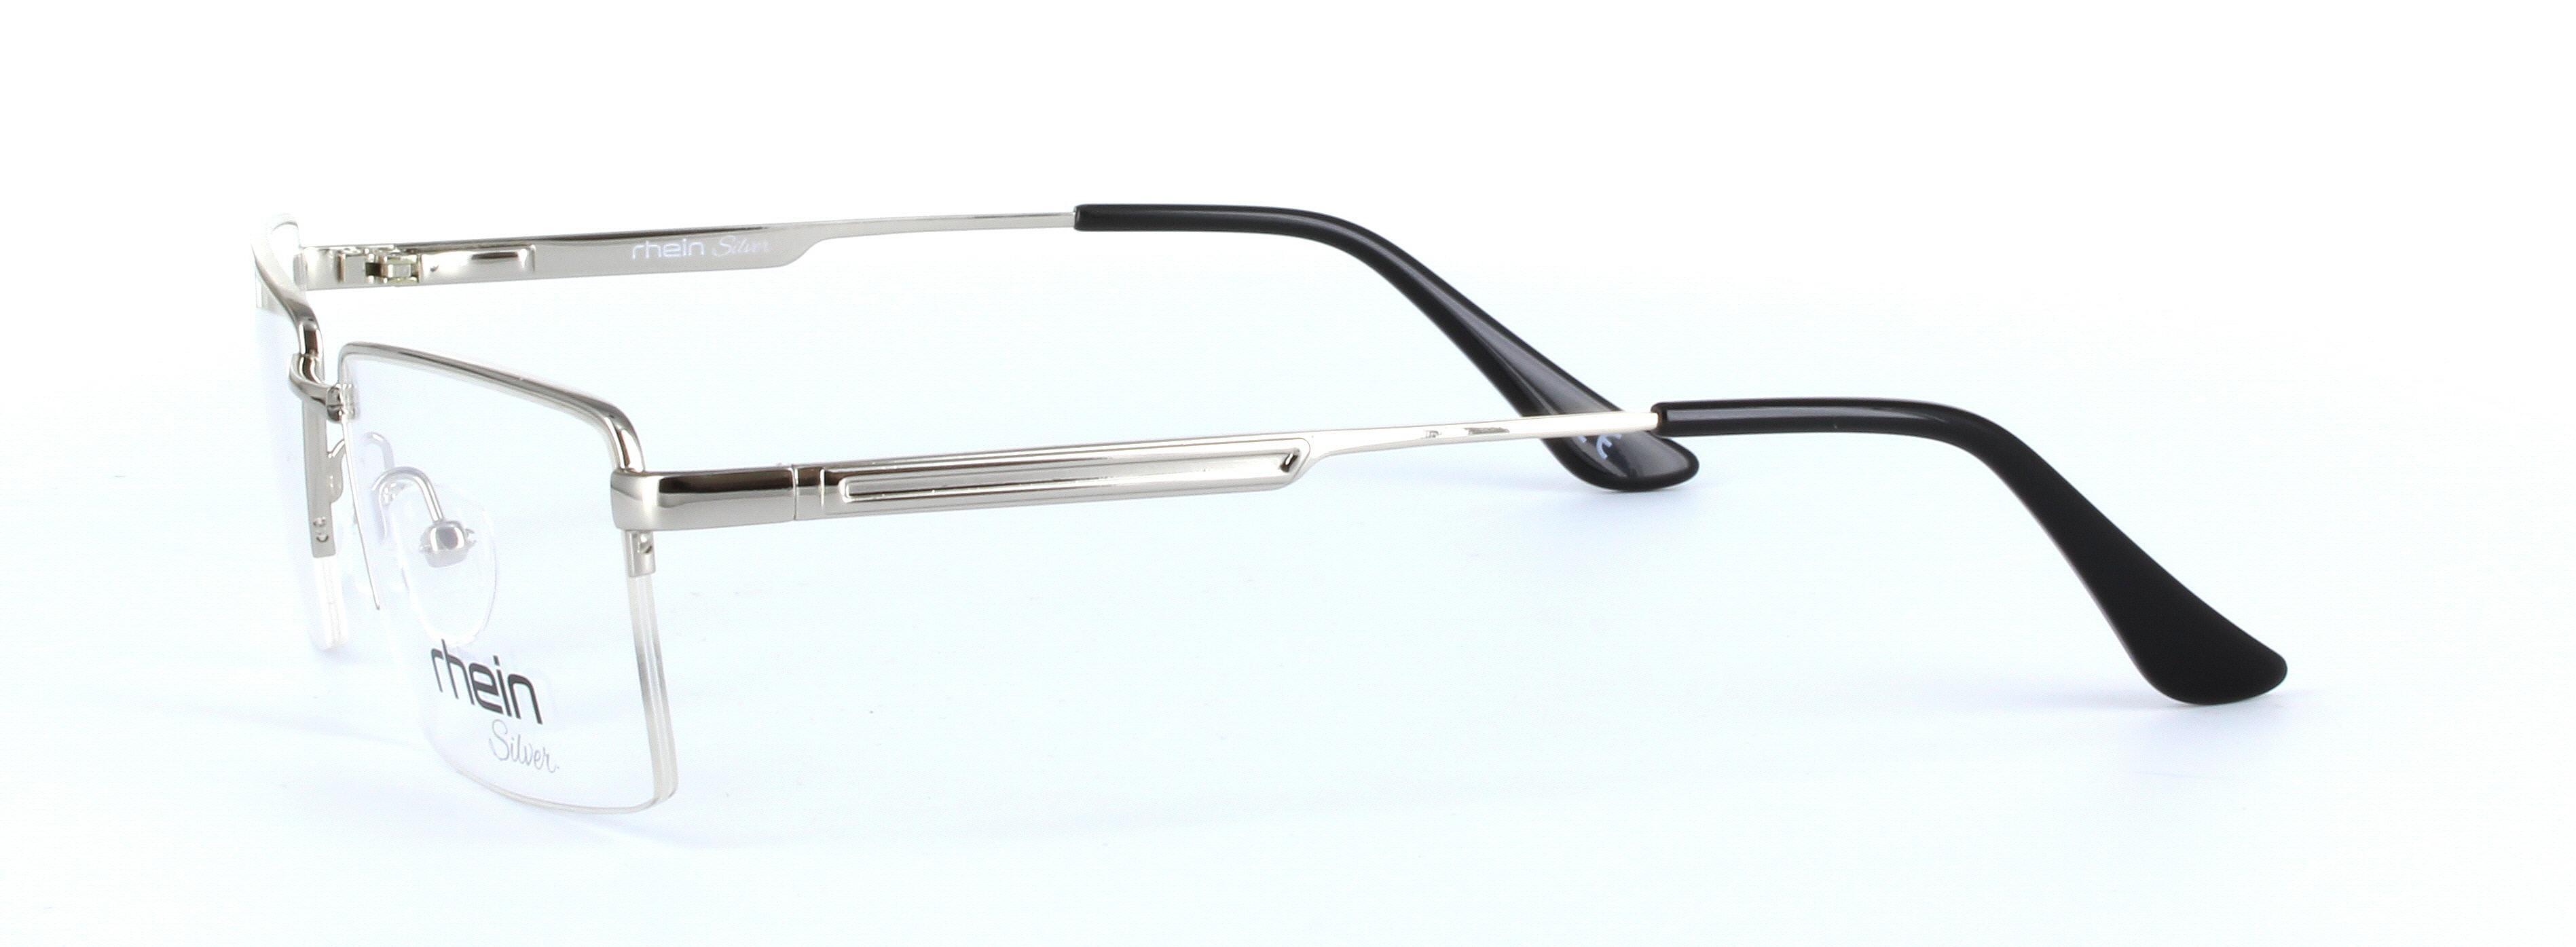 Highfield Silver Semi Rimless Rectangular Metal Glasses - Image View 2